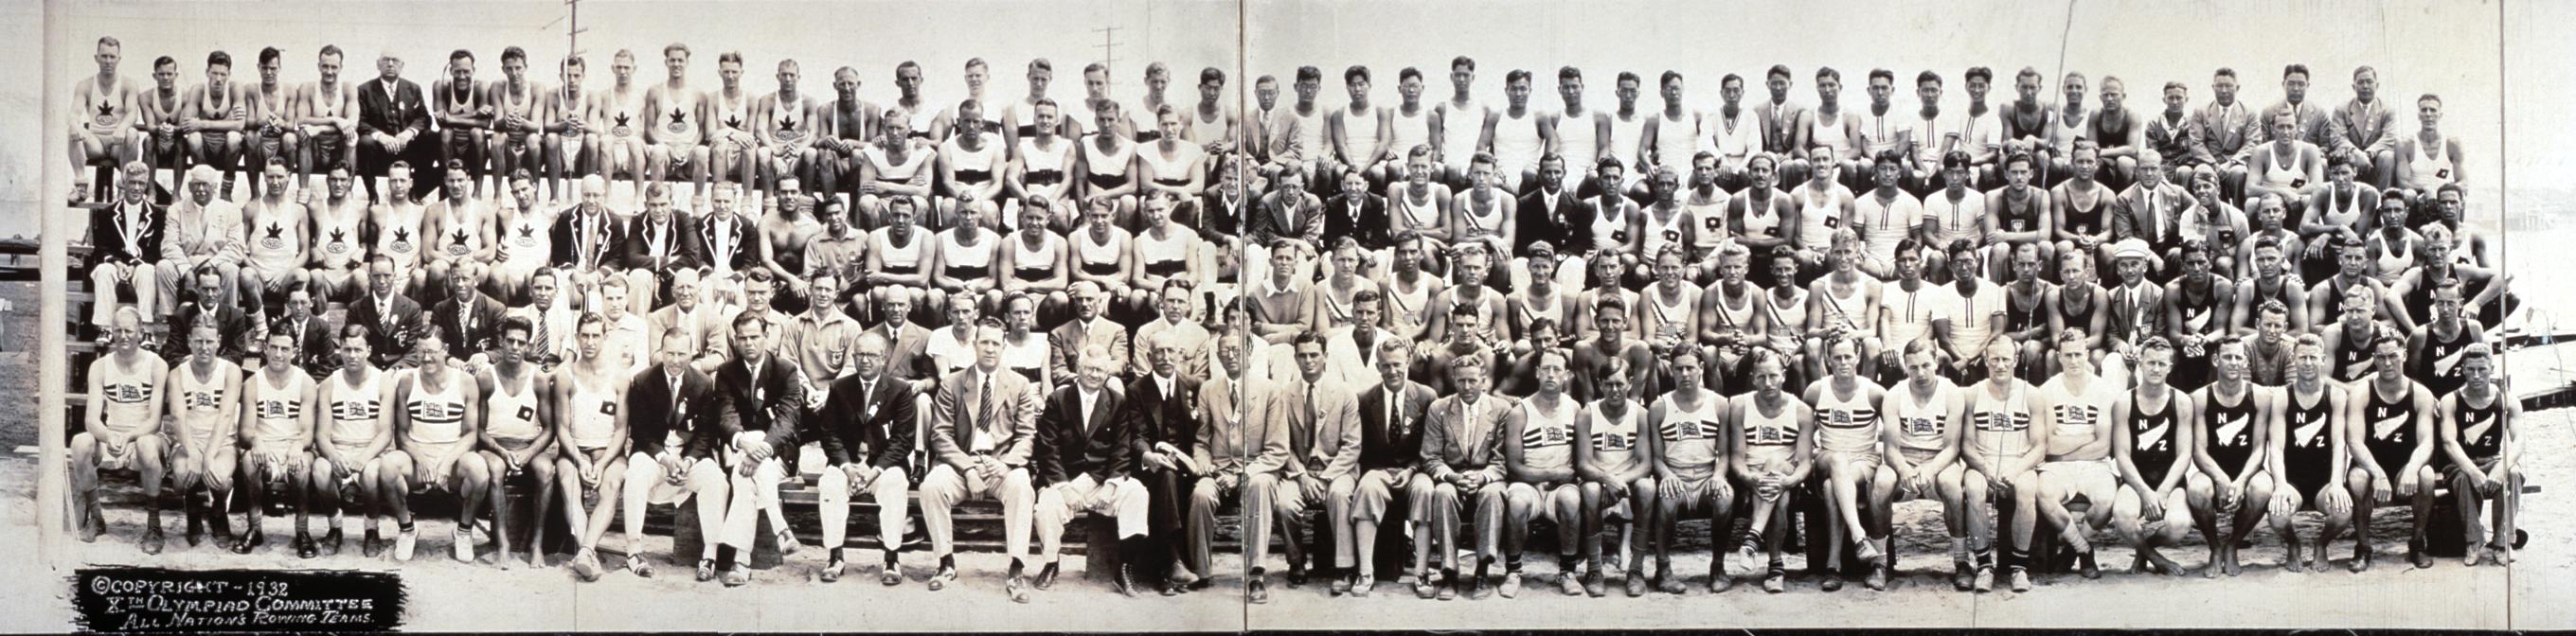 1932 Summer Olympics rowing teams